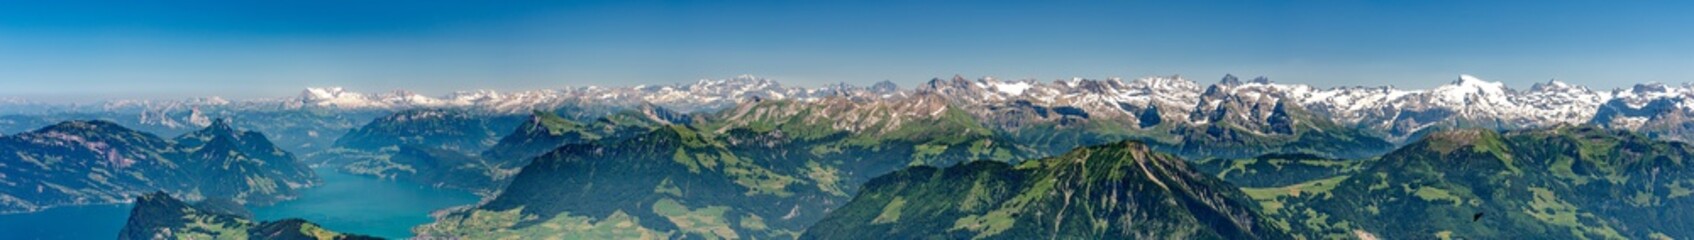 Panorama view on lake Lucerne, Rigi Kulm, Burgenstock and Alps from Pilatus mountain